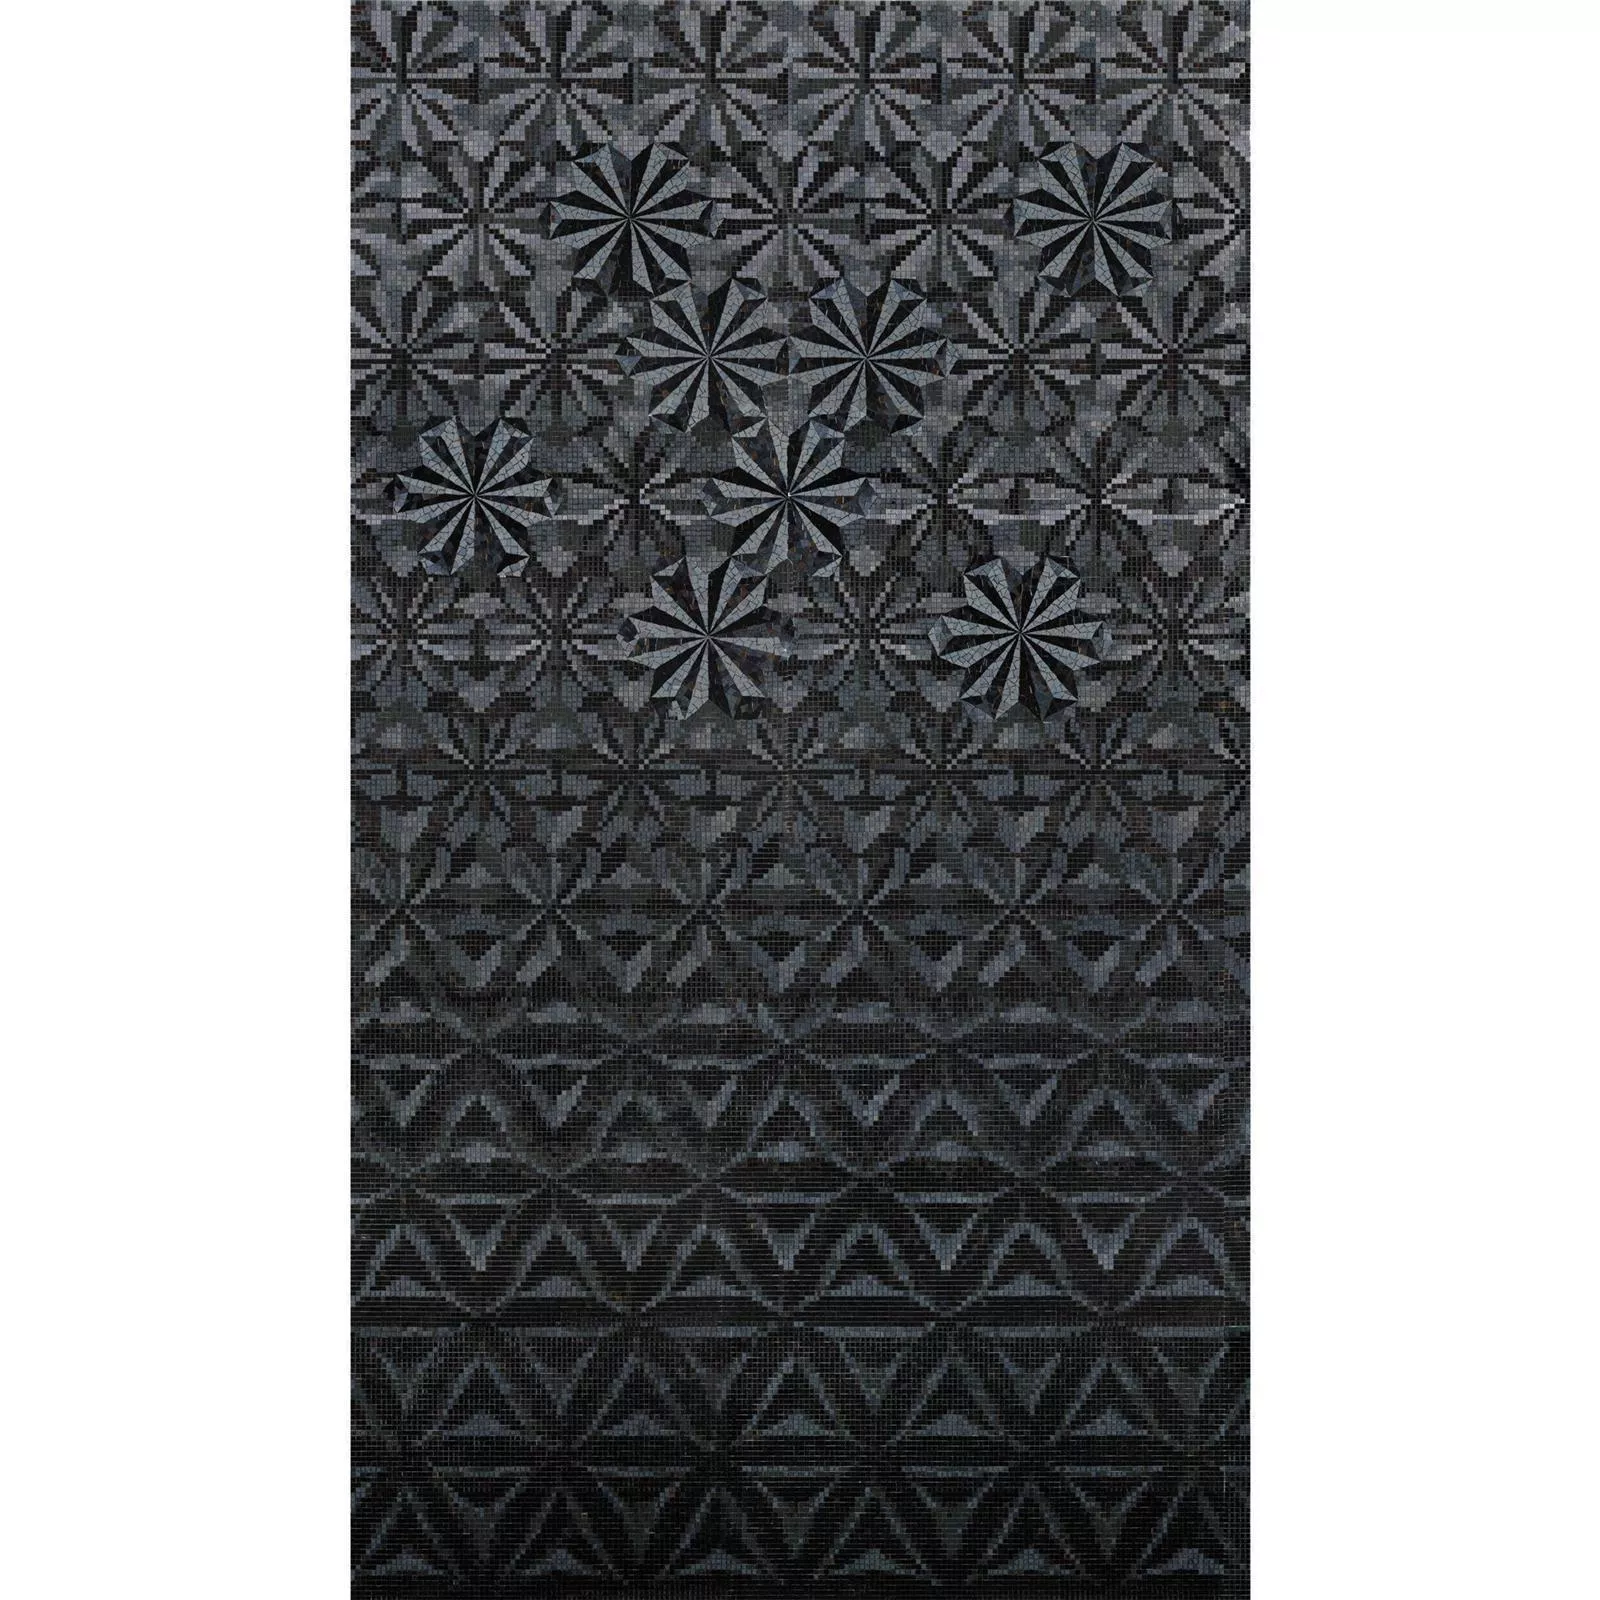 Mozaic De Sticlă Imagine Magicflower Black 100x240cm